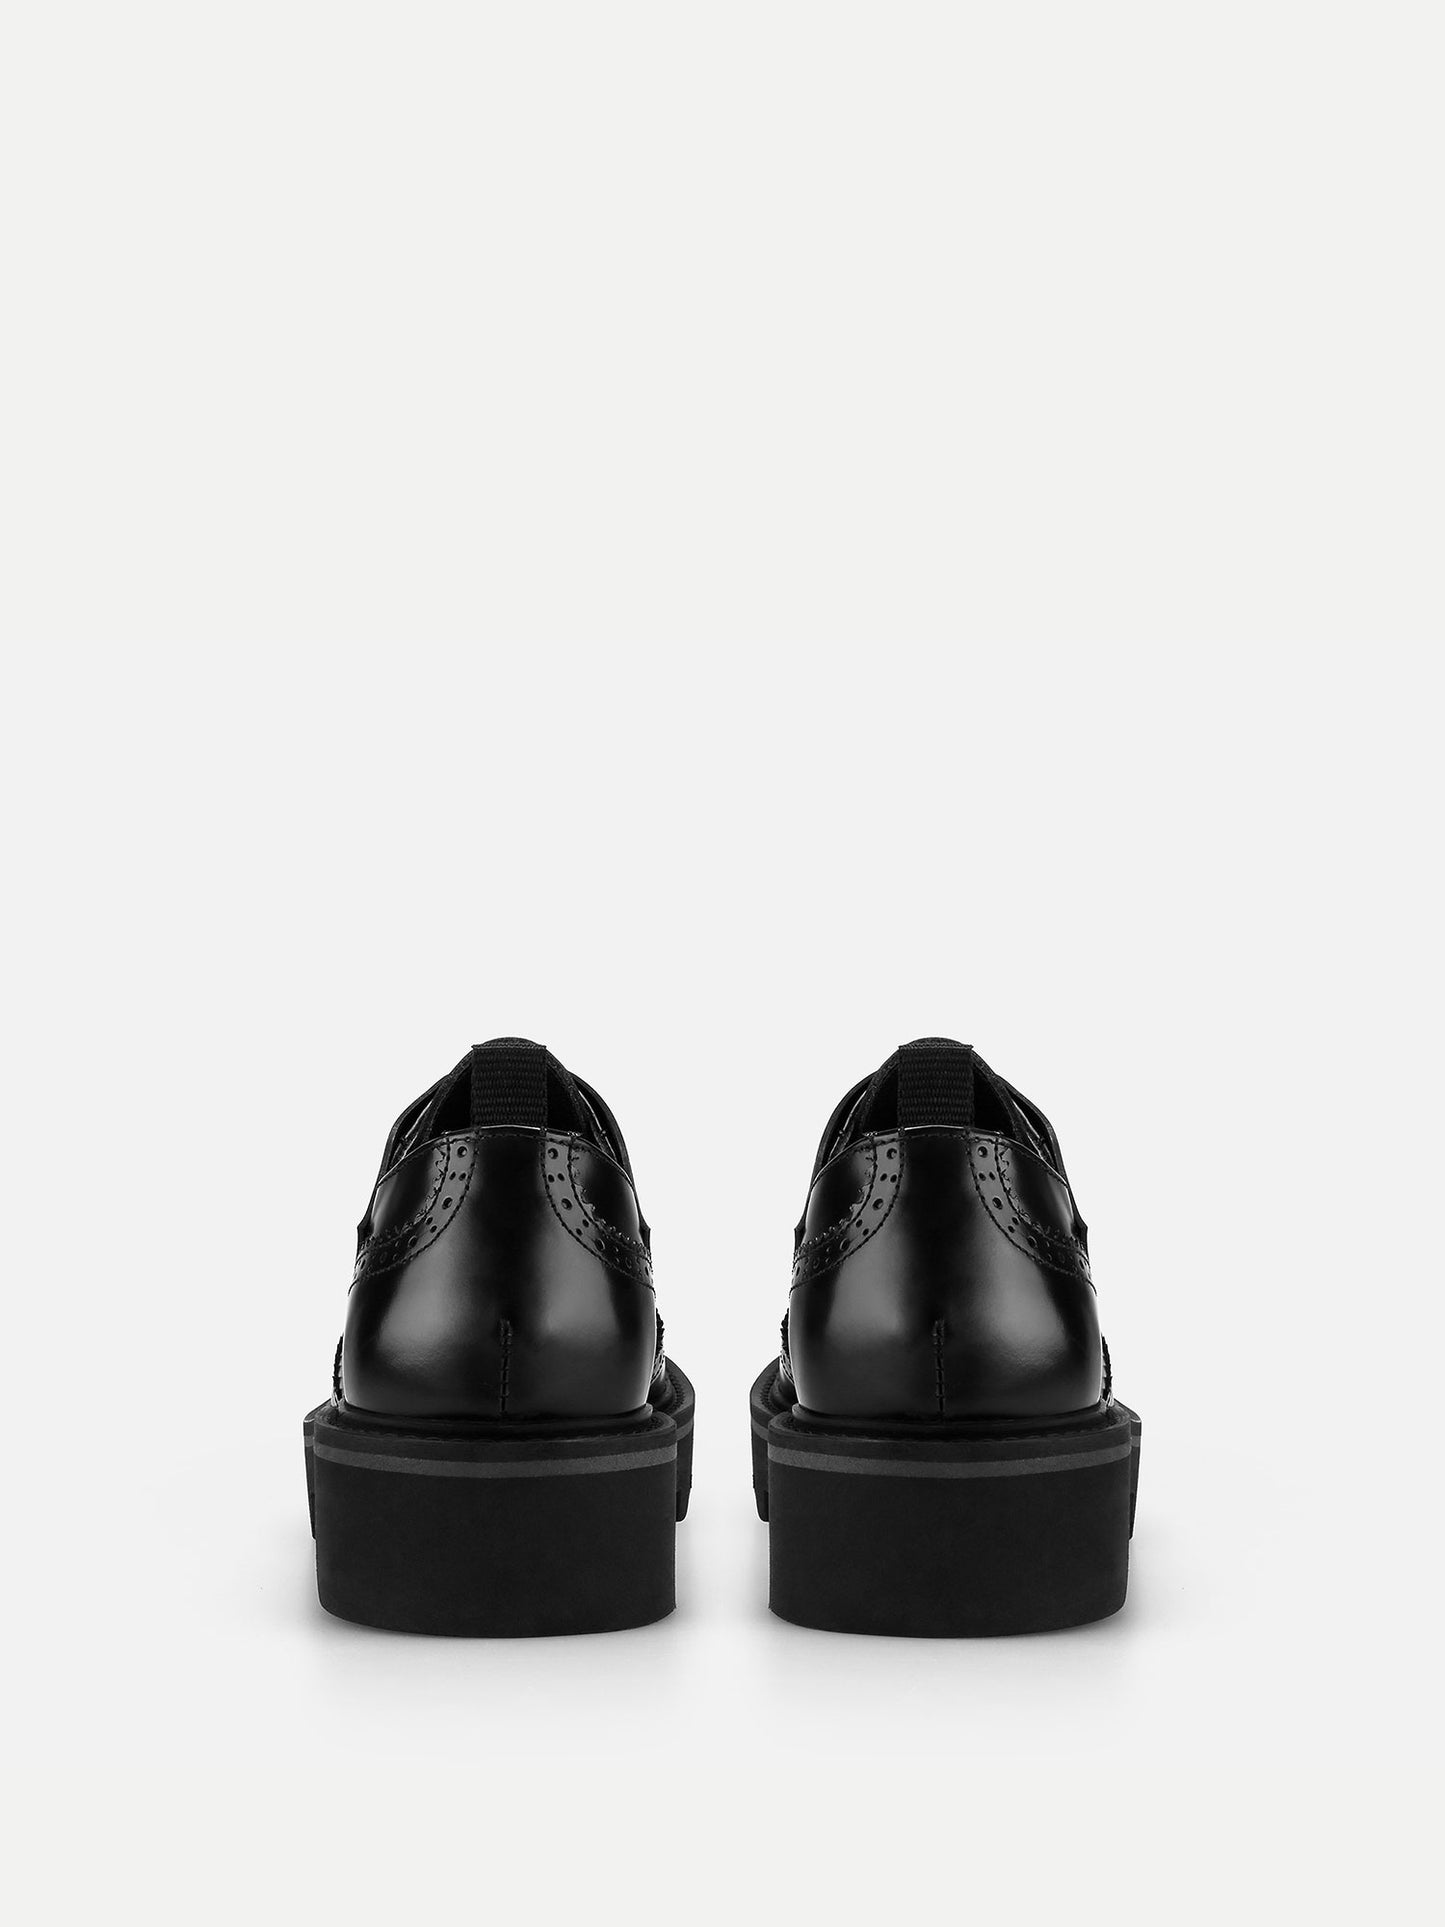 ELENNE Leather Oxford - Black